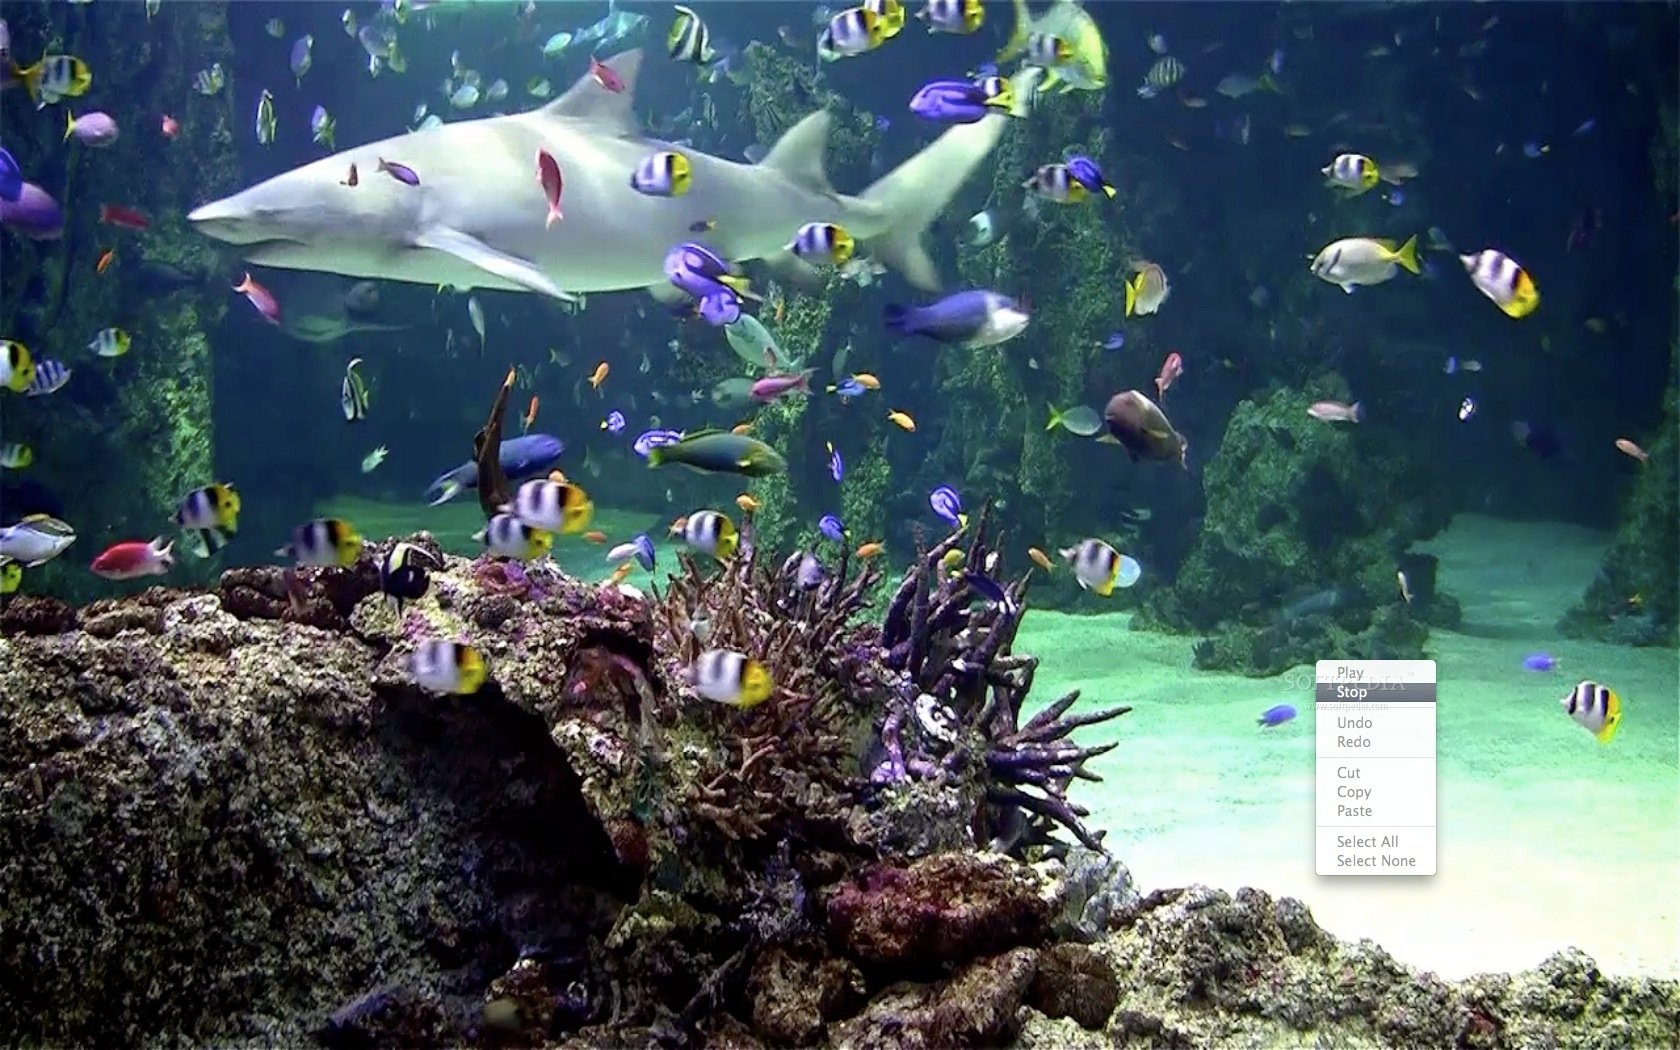 aquarium live wallpaper hd,poisson,biologie marine,poisson,aquarium,sous marin